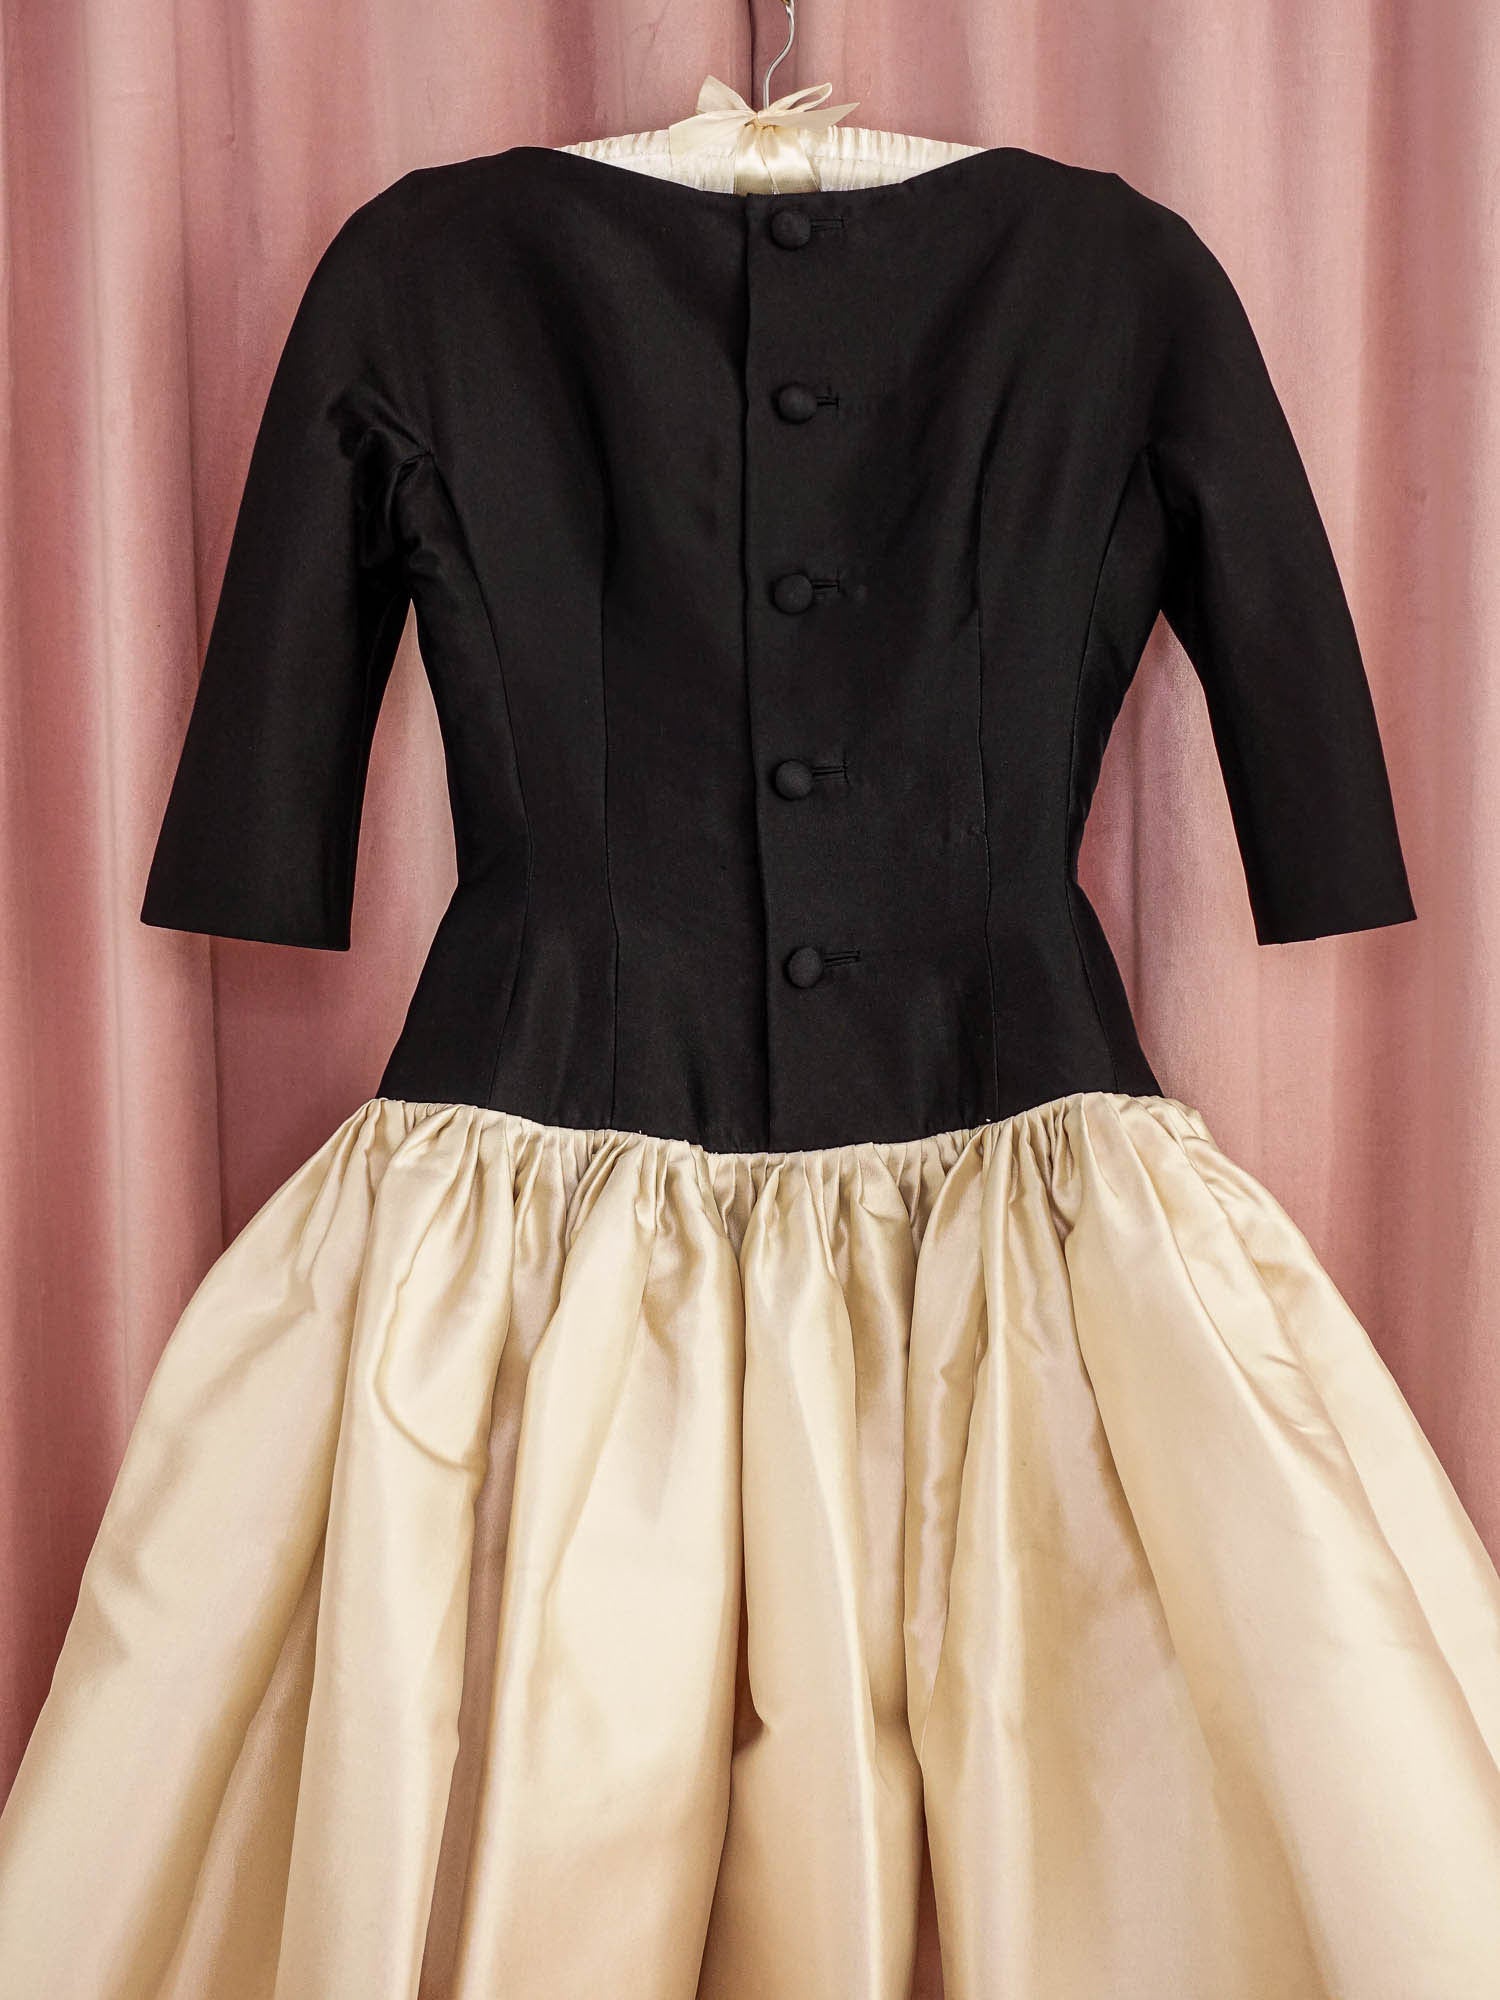 1950s 'Traina-Norell' Black and Ivory Satin Drop Waist Evening Dress